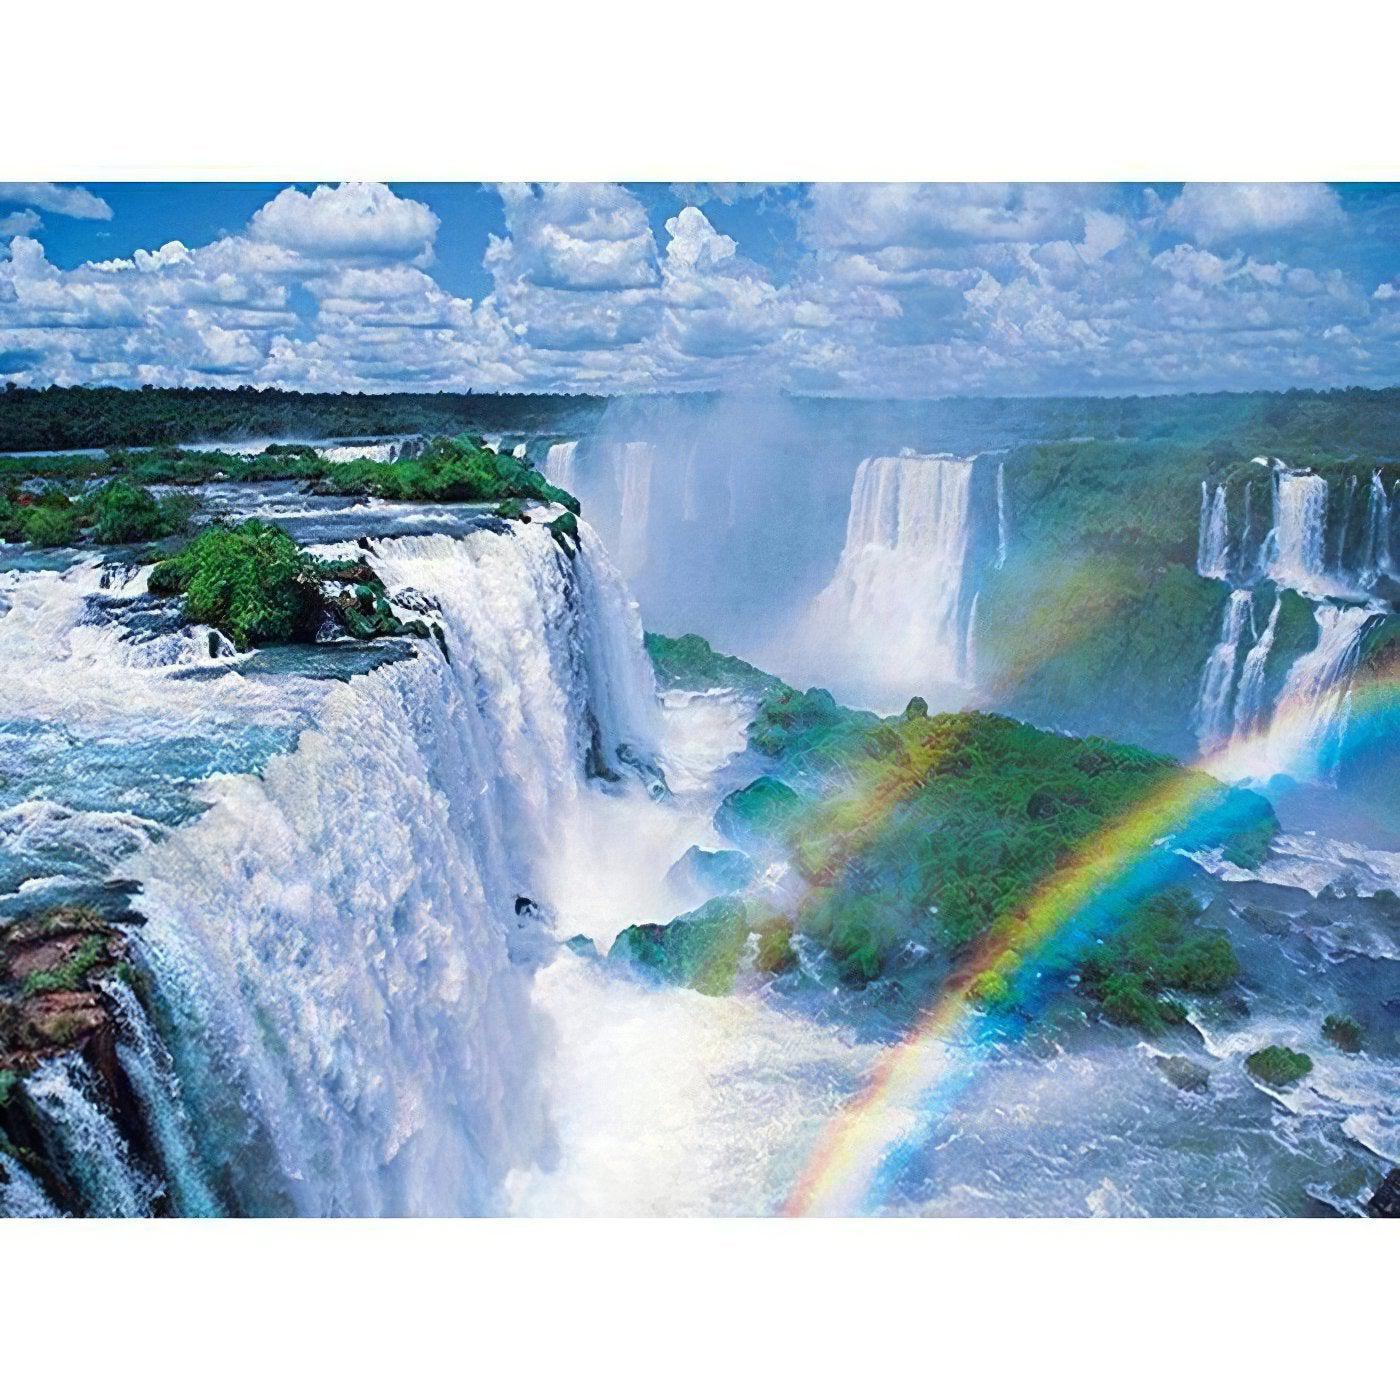 Feel the refreshing spray and hear the thunderous cascade of nature's most splendid Beautiful Waterfall - Diamondartlove